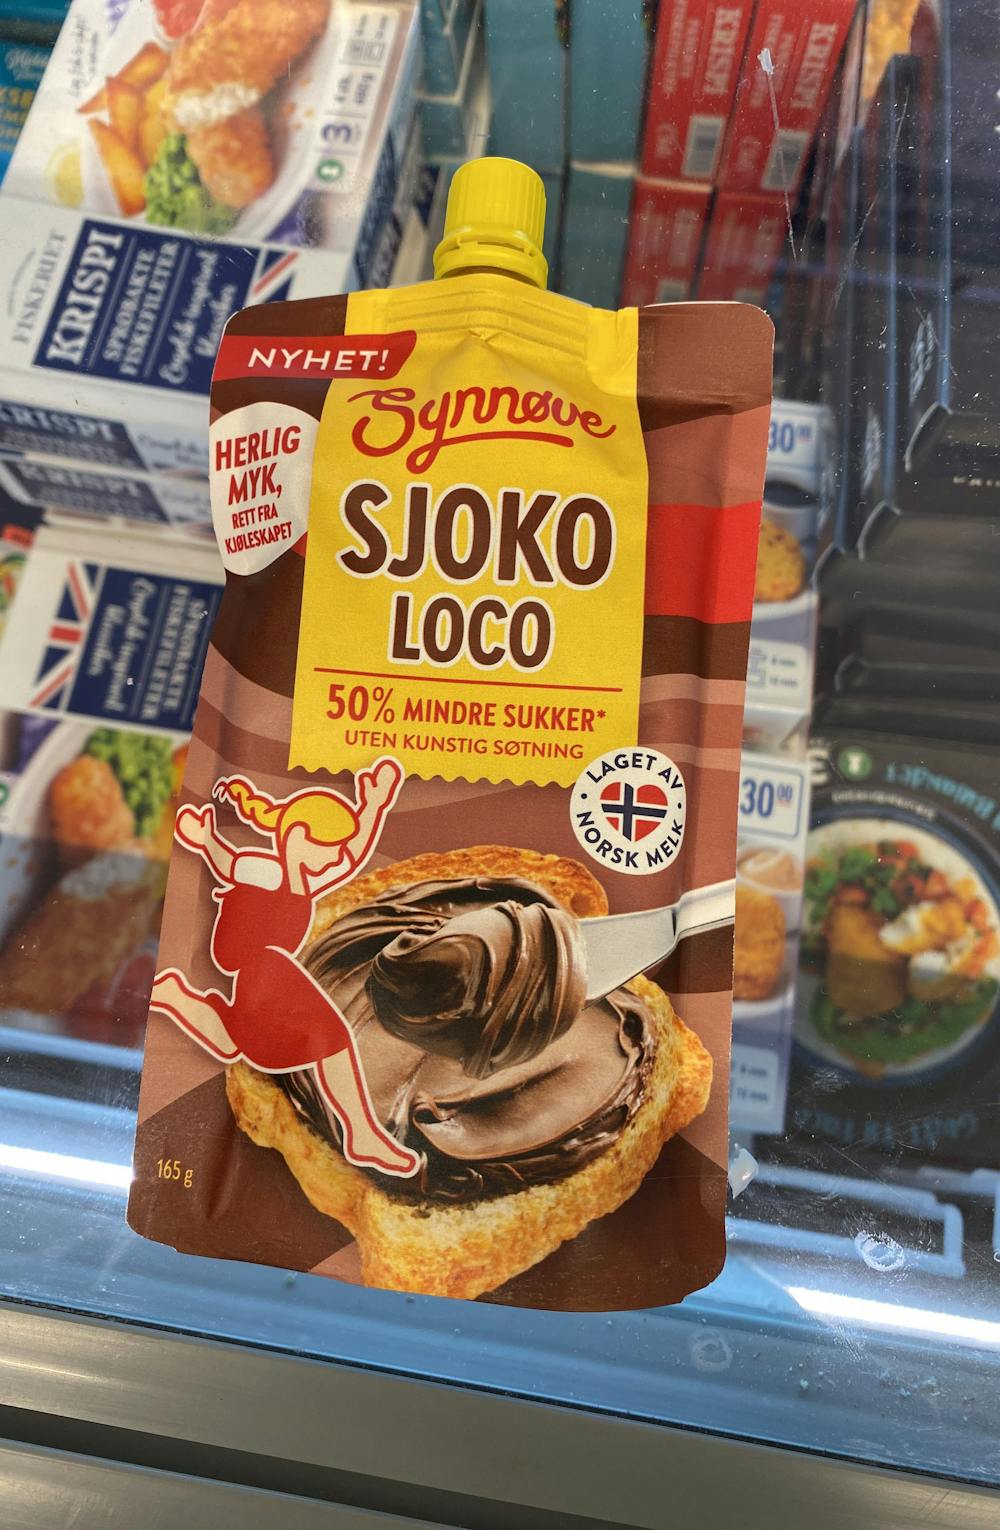 Sjoko Loco, Synnøve